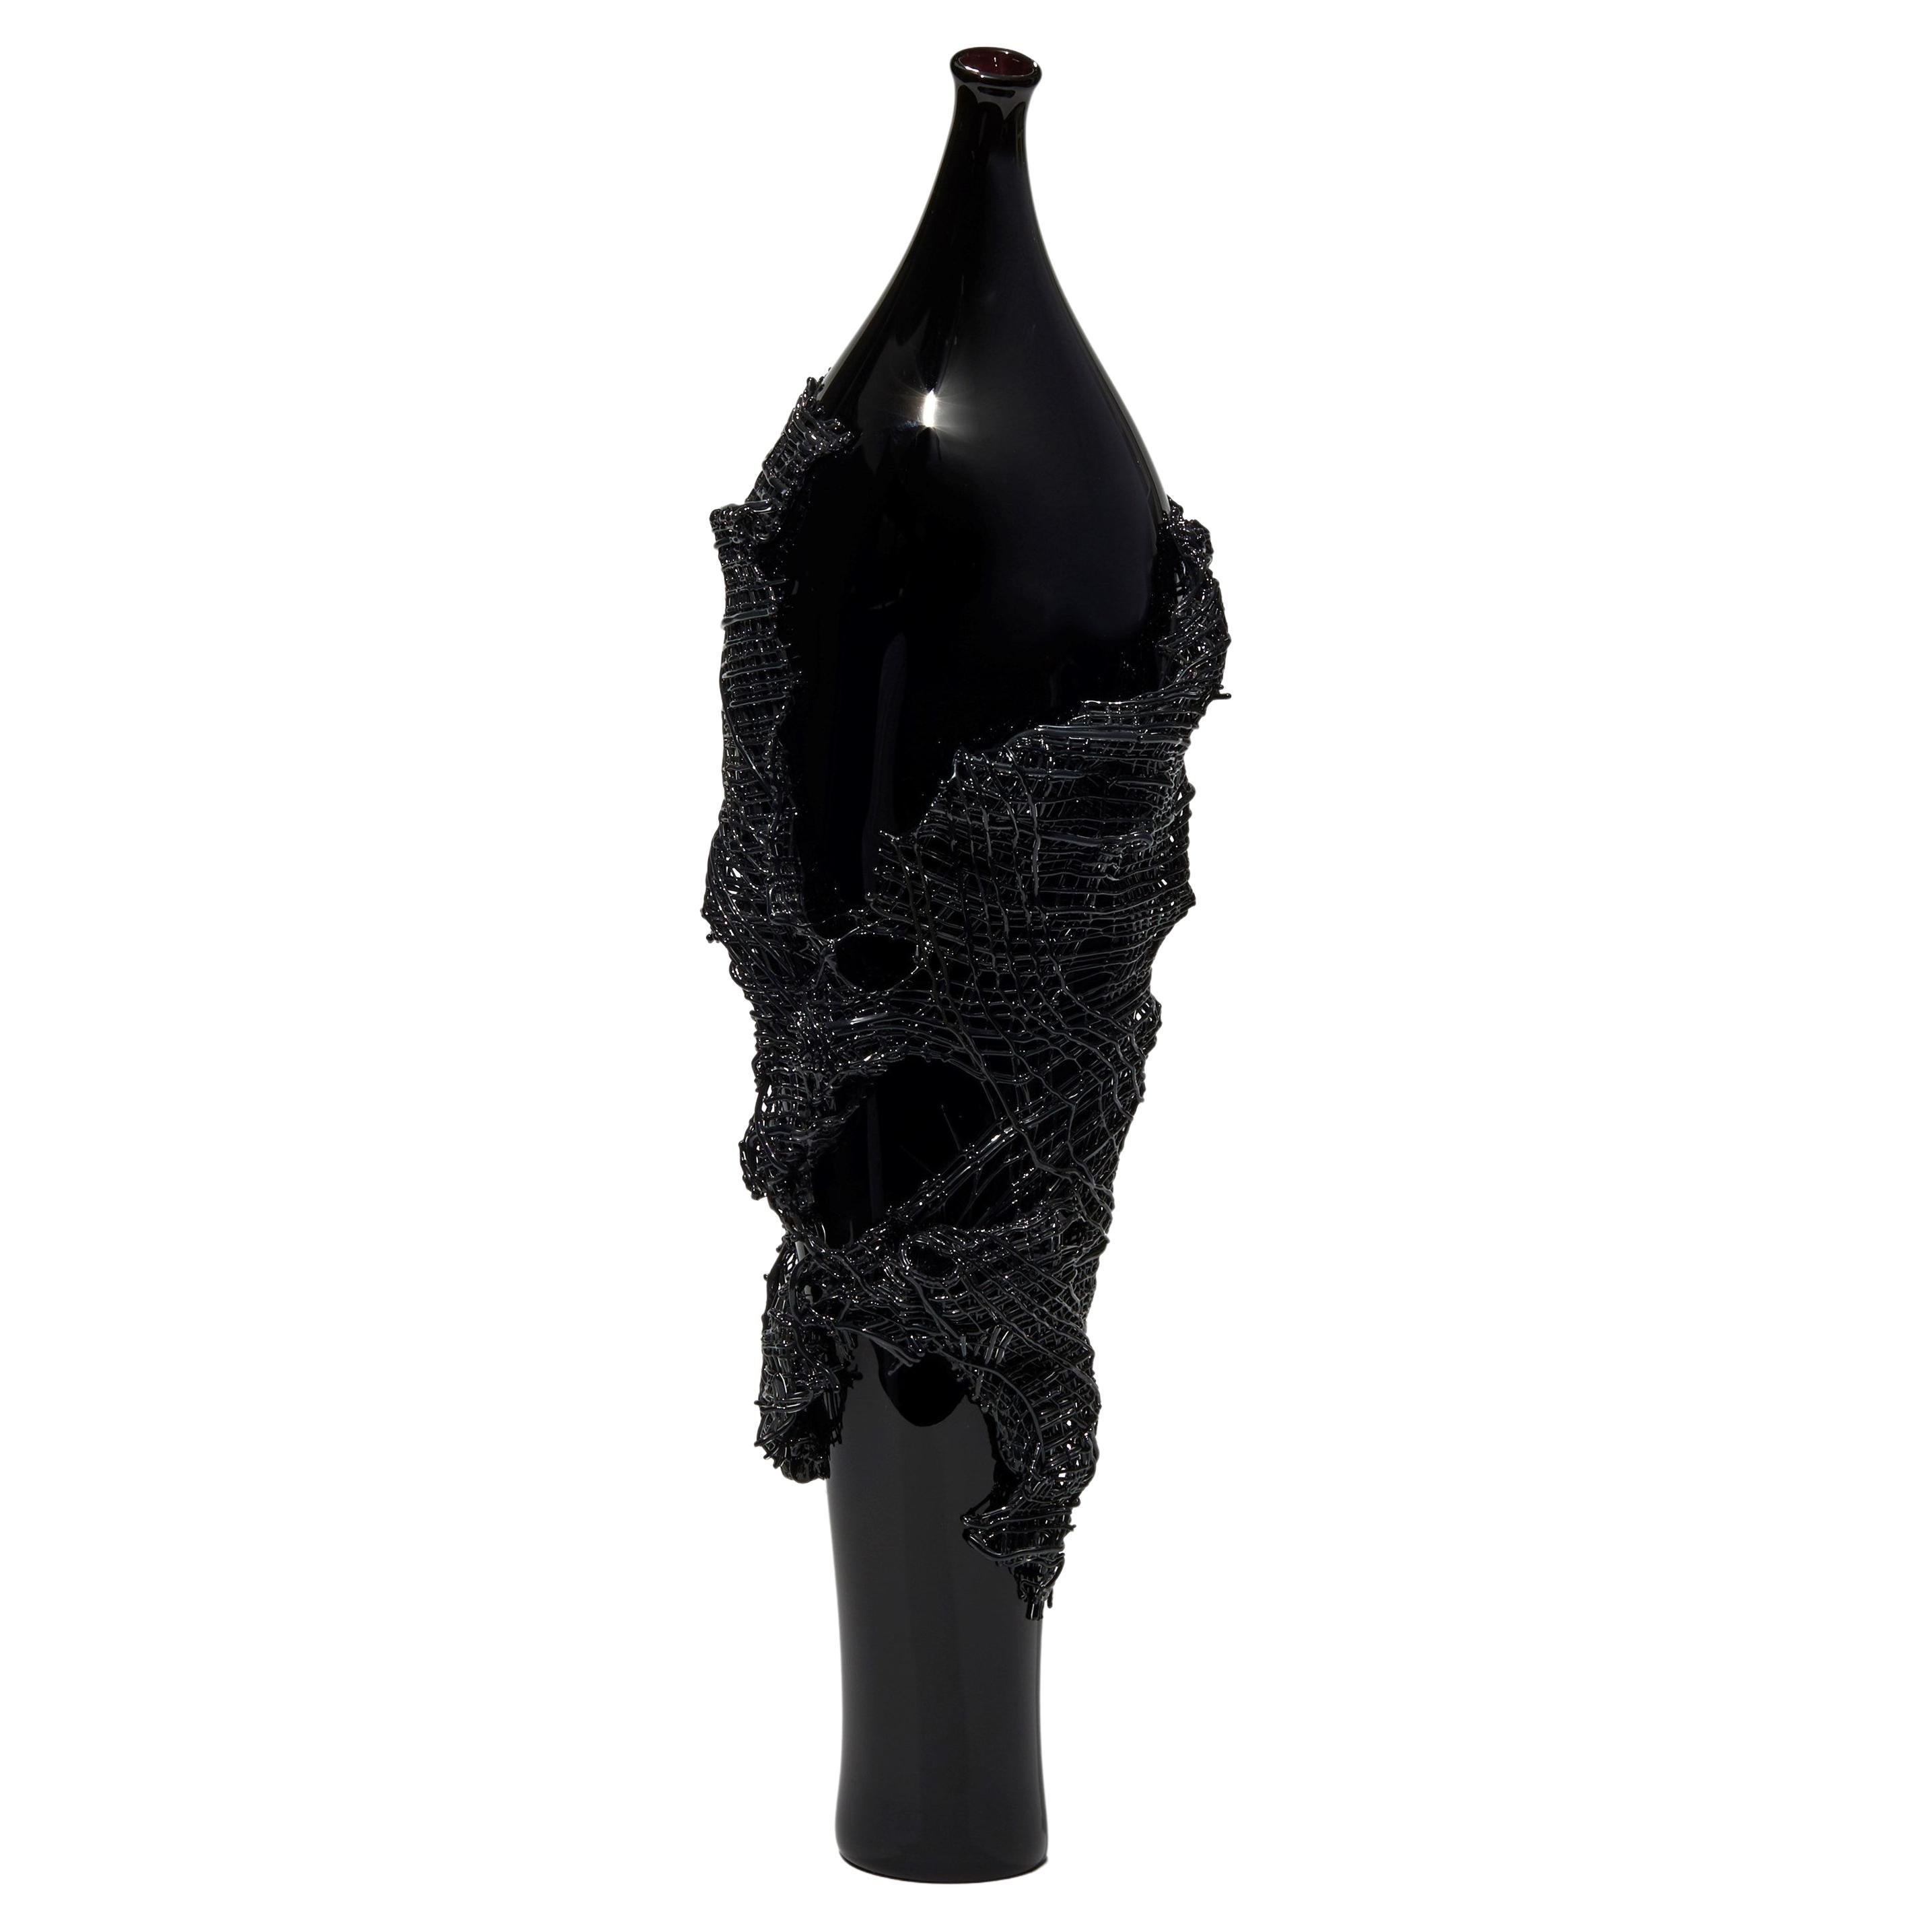 Odysseus, a unique black hand-blown glass sculpture by Cathryn Shilling